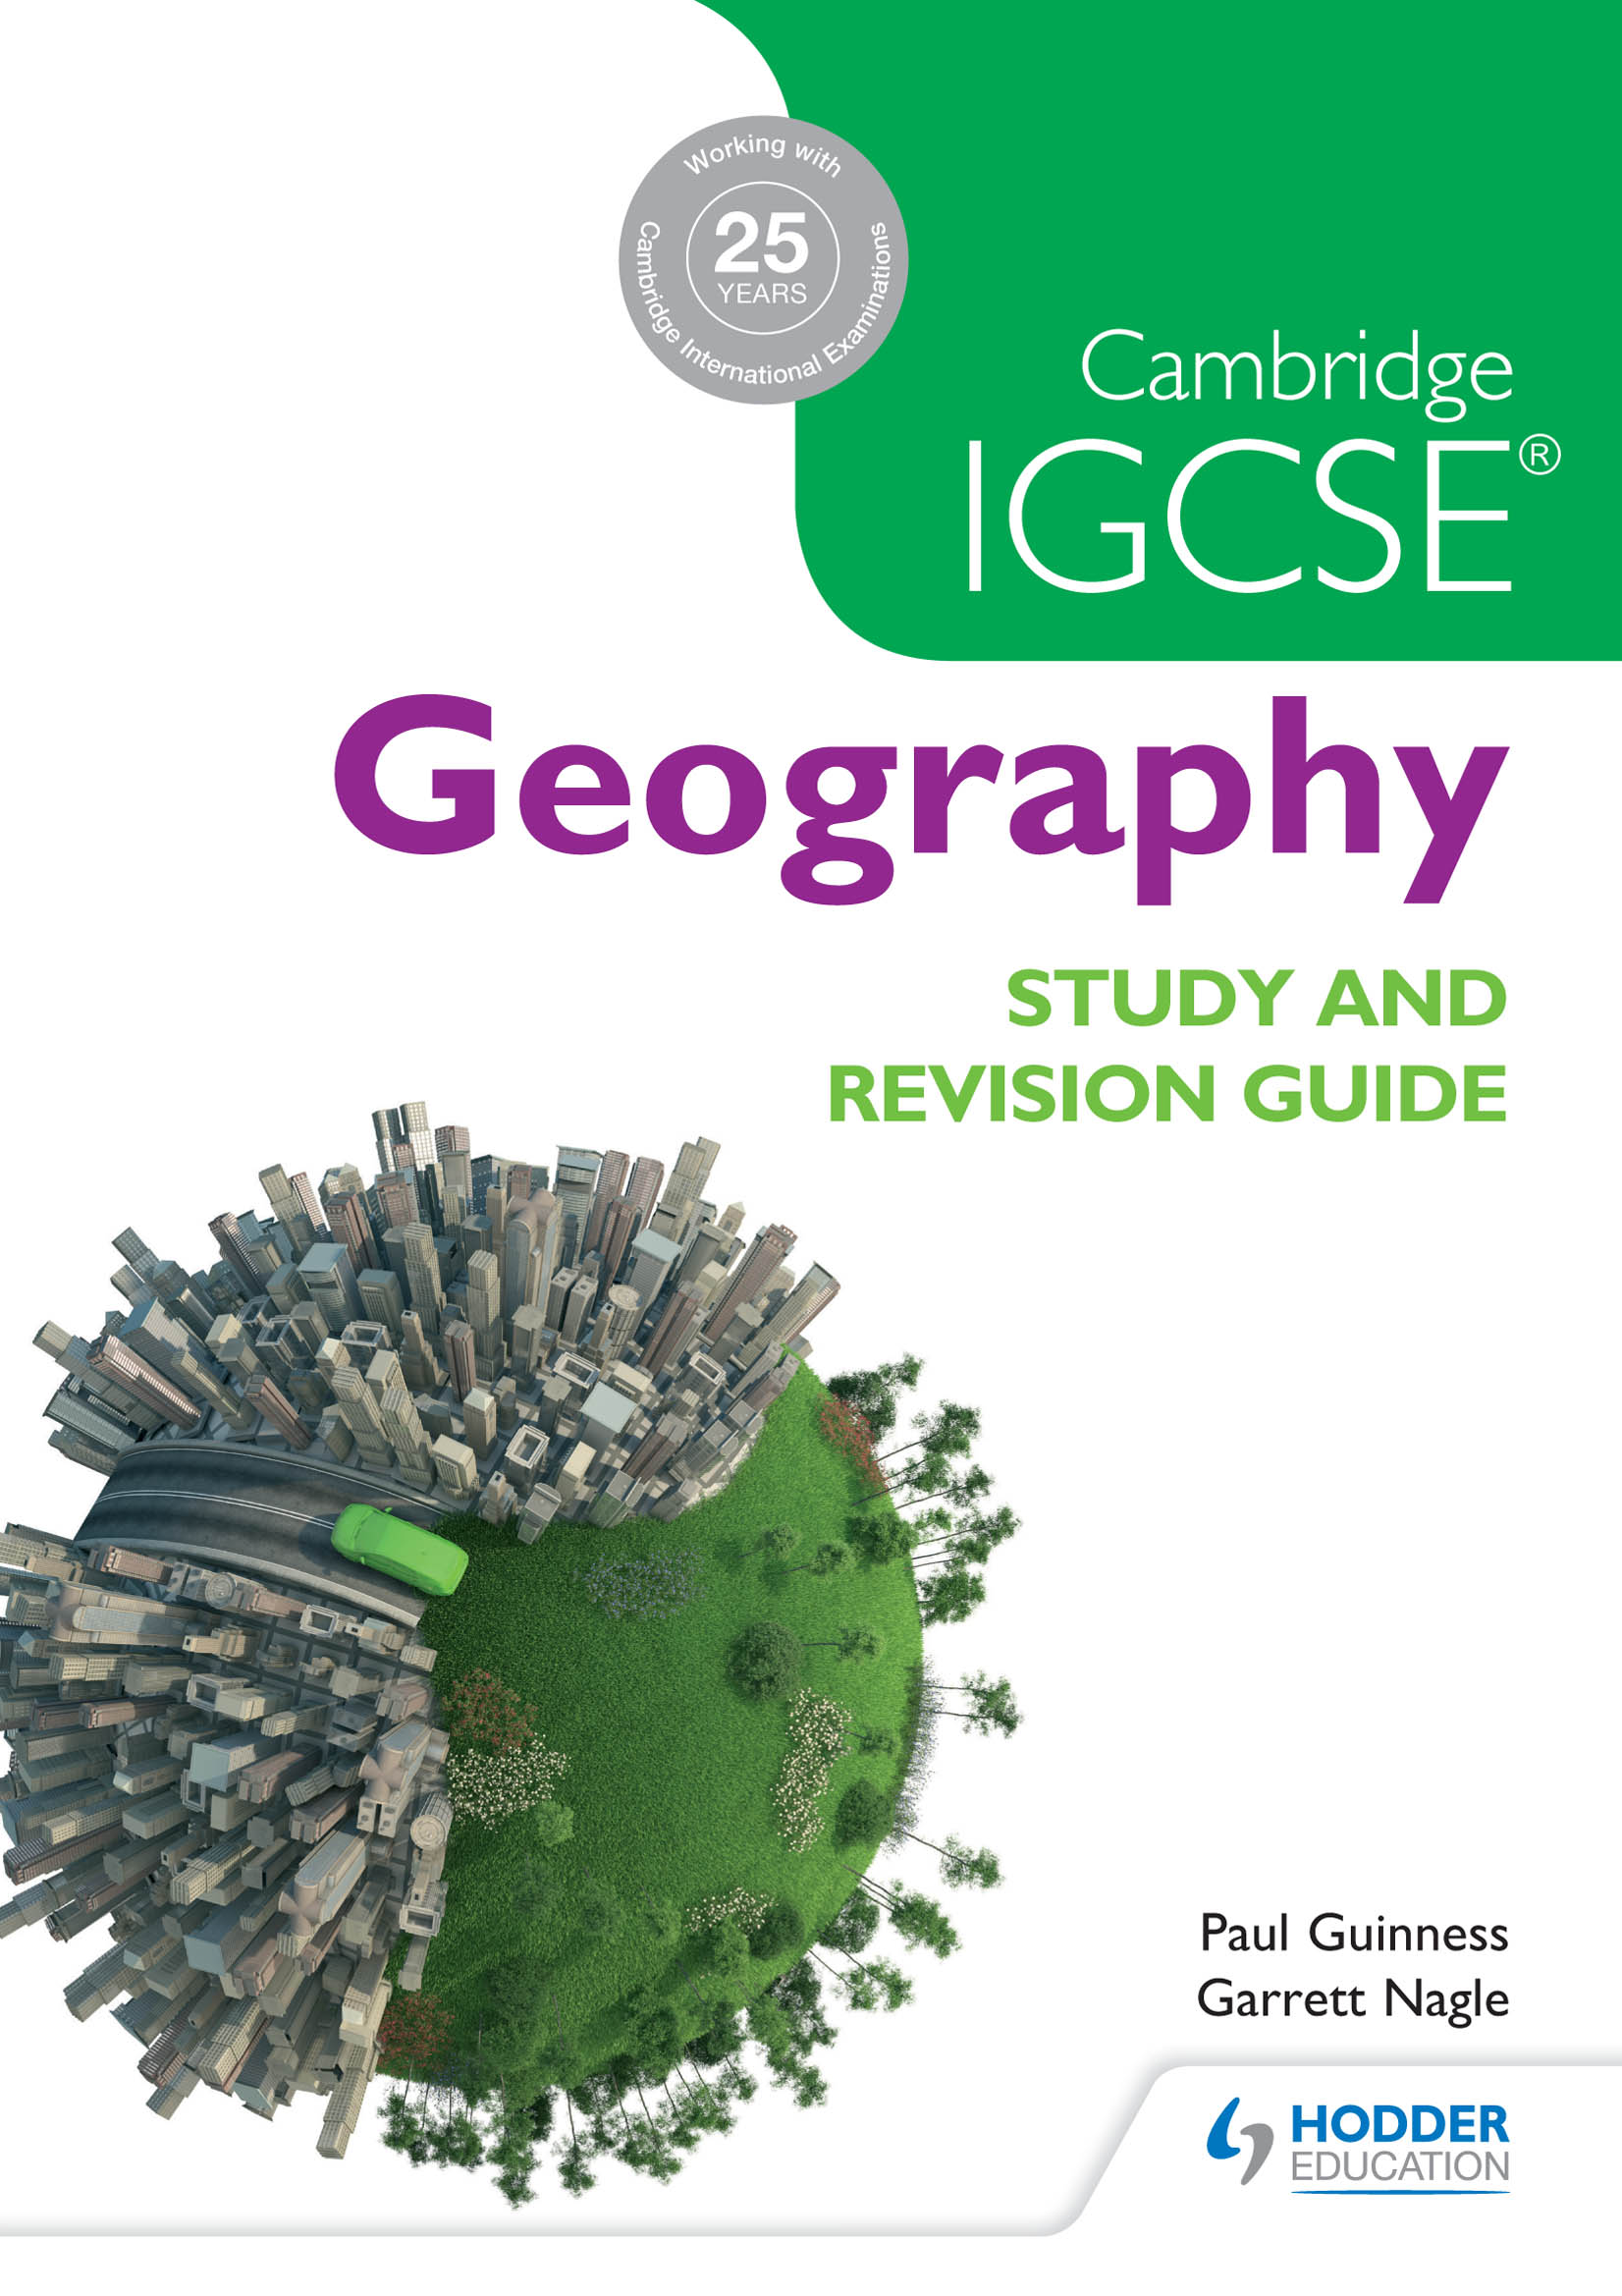 [DESCATALOGADO] Cambridge IGCSE Geography Study and Revision Guide